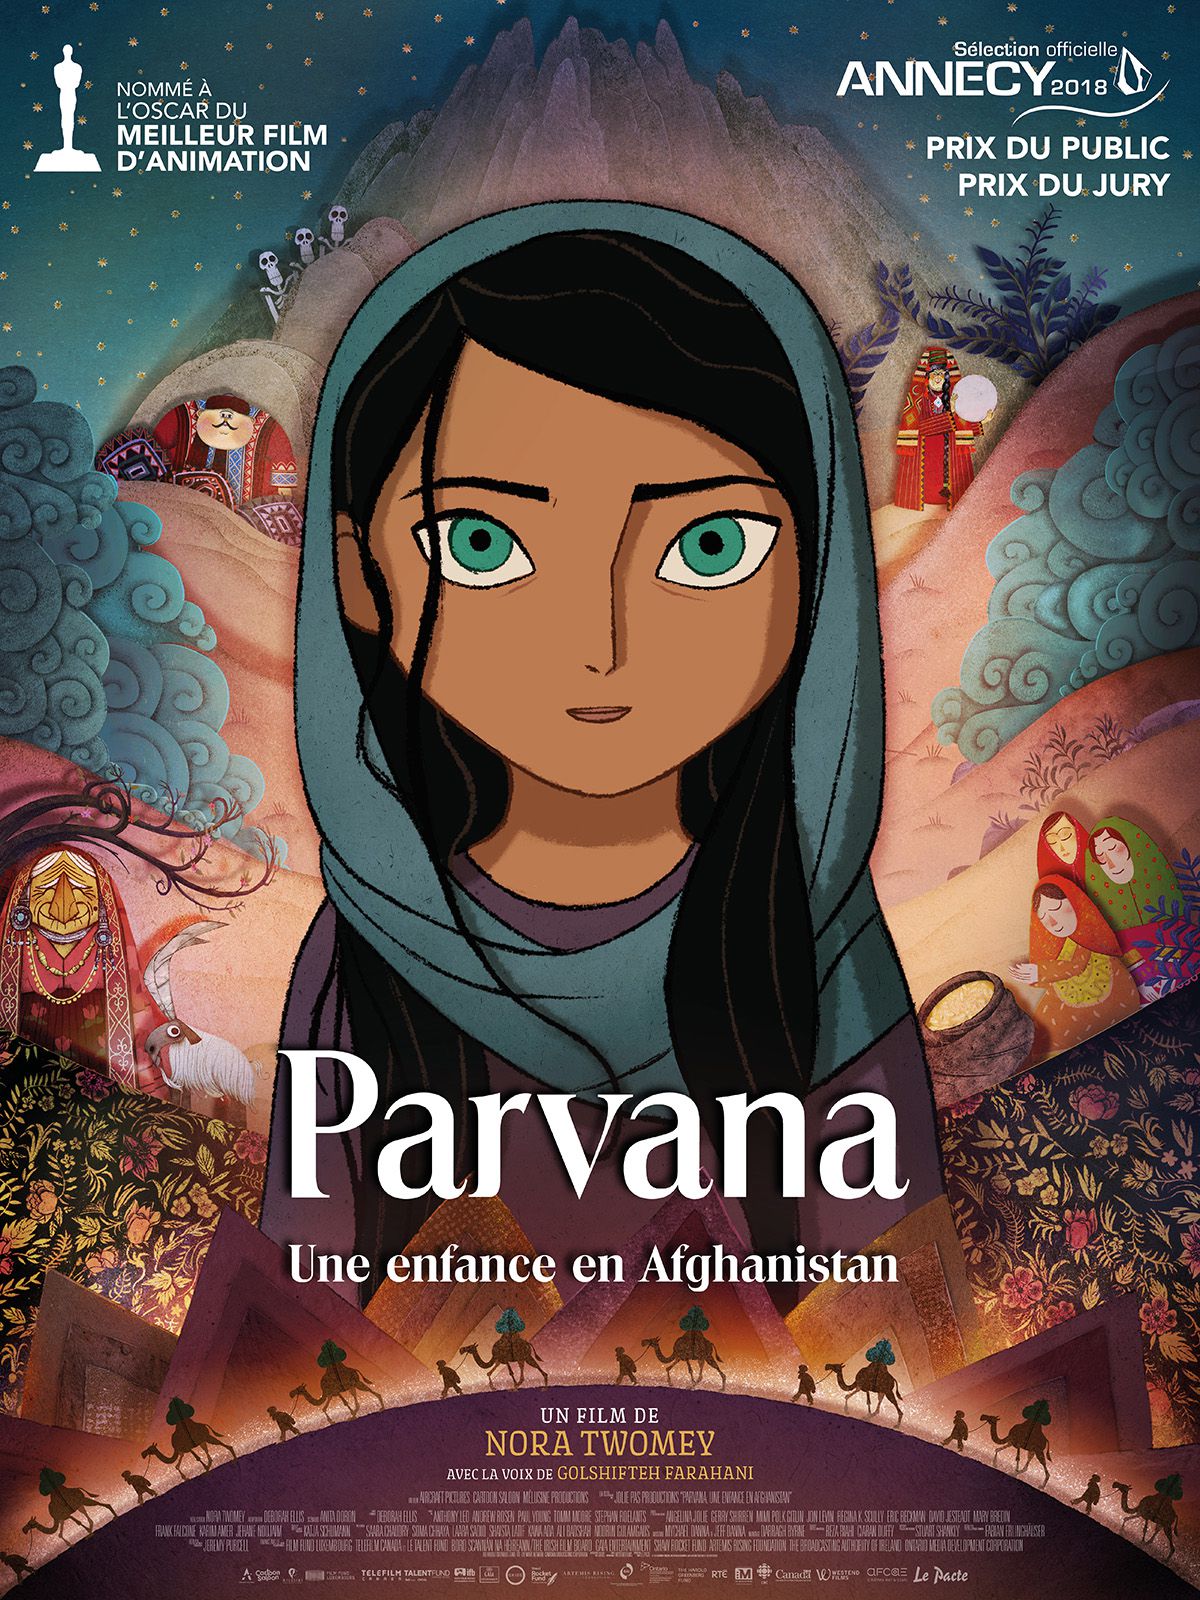 Parvana, une enfance en Afghanistan - Long-métrage d'animation (2018) streaming VF gratuit complet